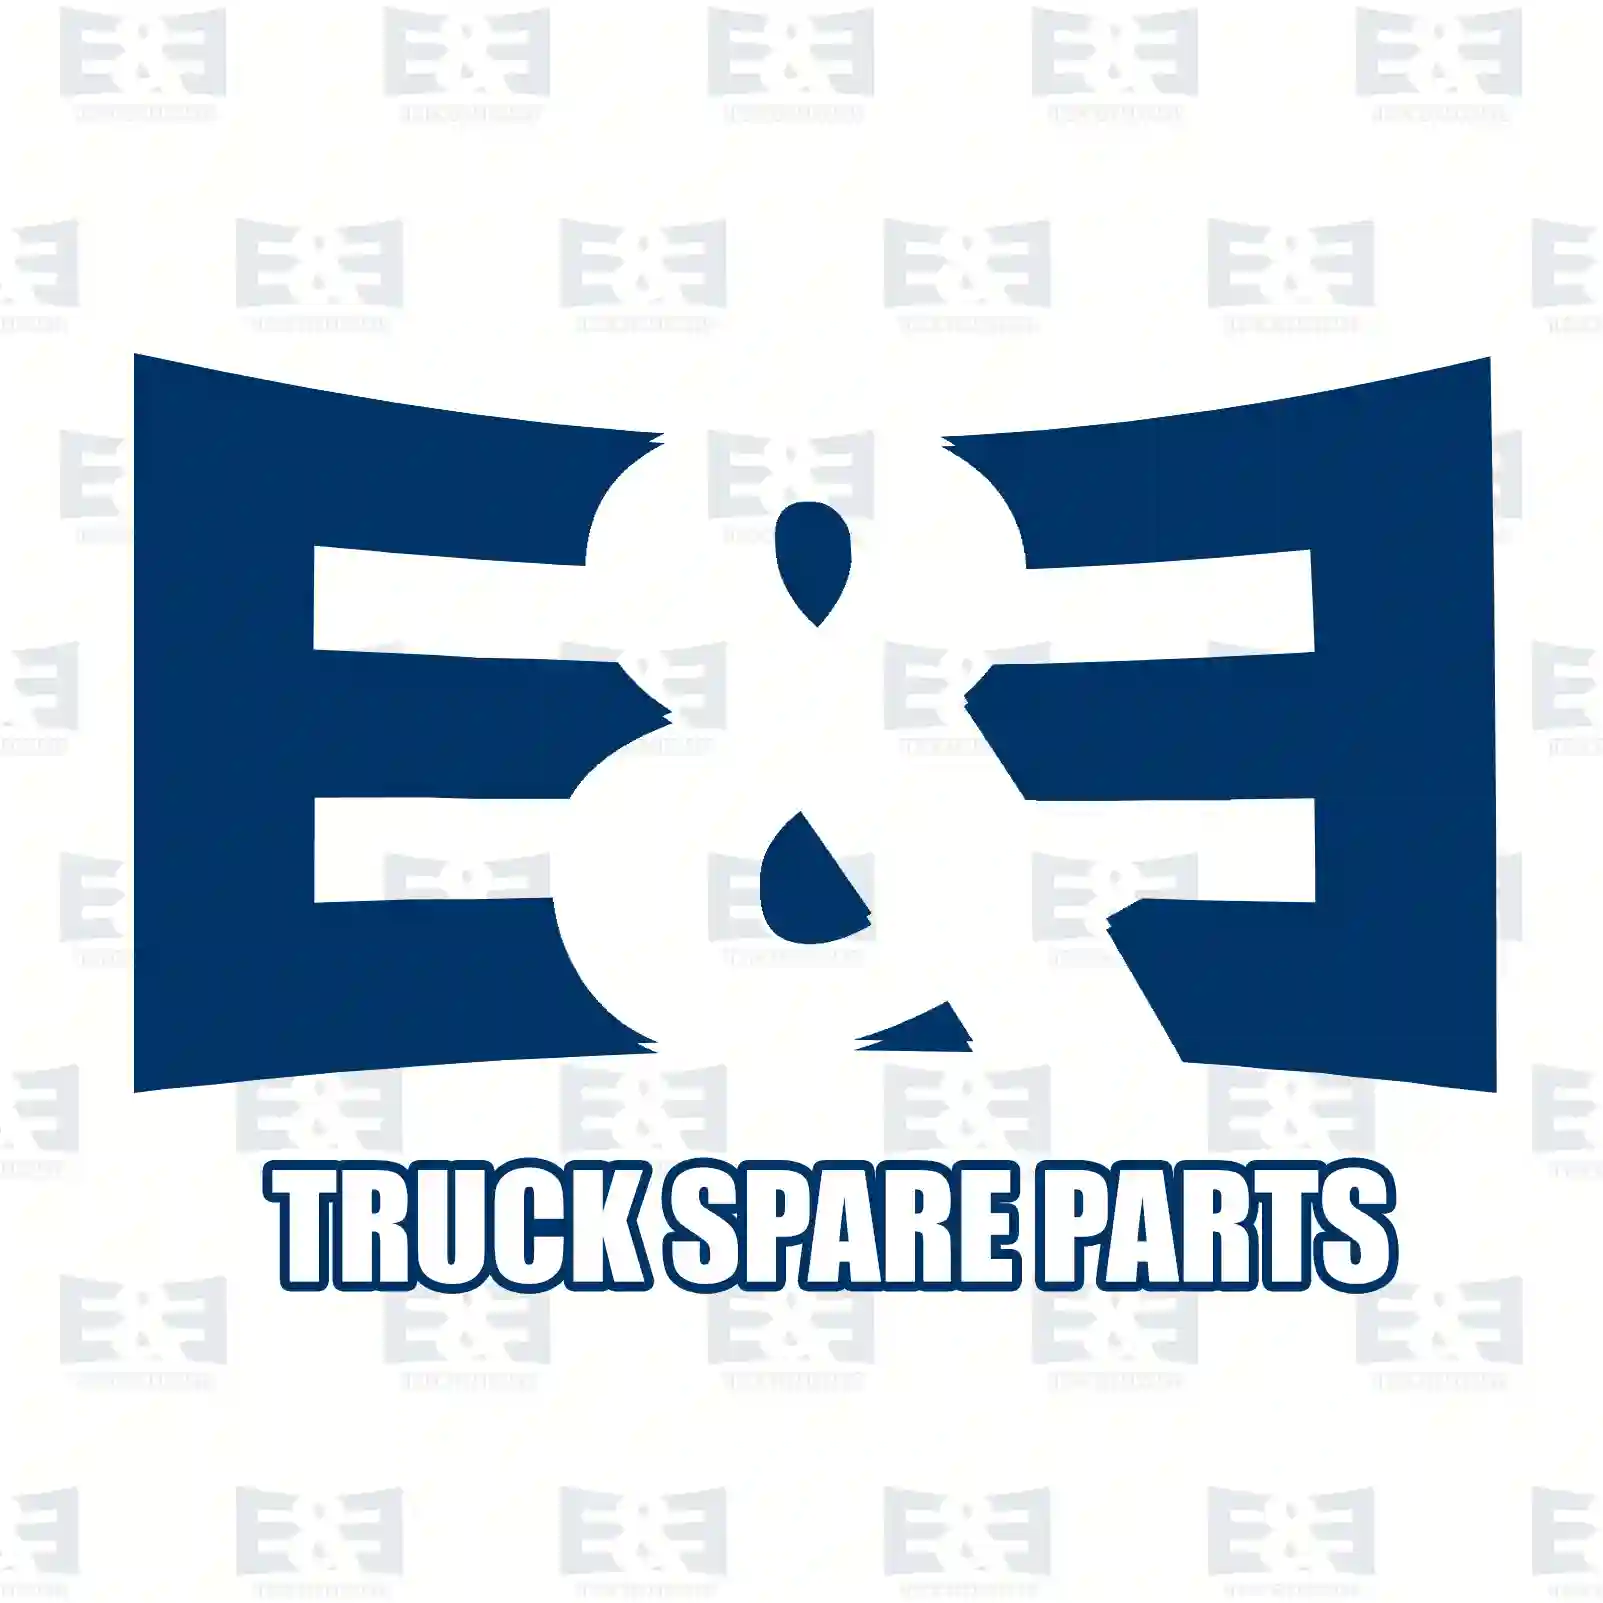 Belt tensioner, complete, with multiribbed belt, 2E2203463, 51958007437S1, , ||  2E2203463 E&E Truck Spare Parts | Truck Spare Parts, Auotomotive Spare Parts Belt tensioner, complete, with multiribbed belt, 2E2203463, 51958007437S1, , ||  2E2203463 E&E Truck Spare Parts | Truck Spare Parts, Auotomotive Spare Parts